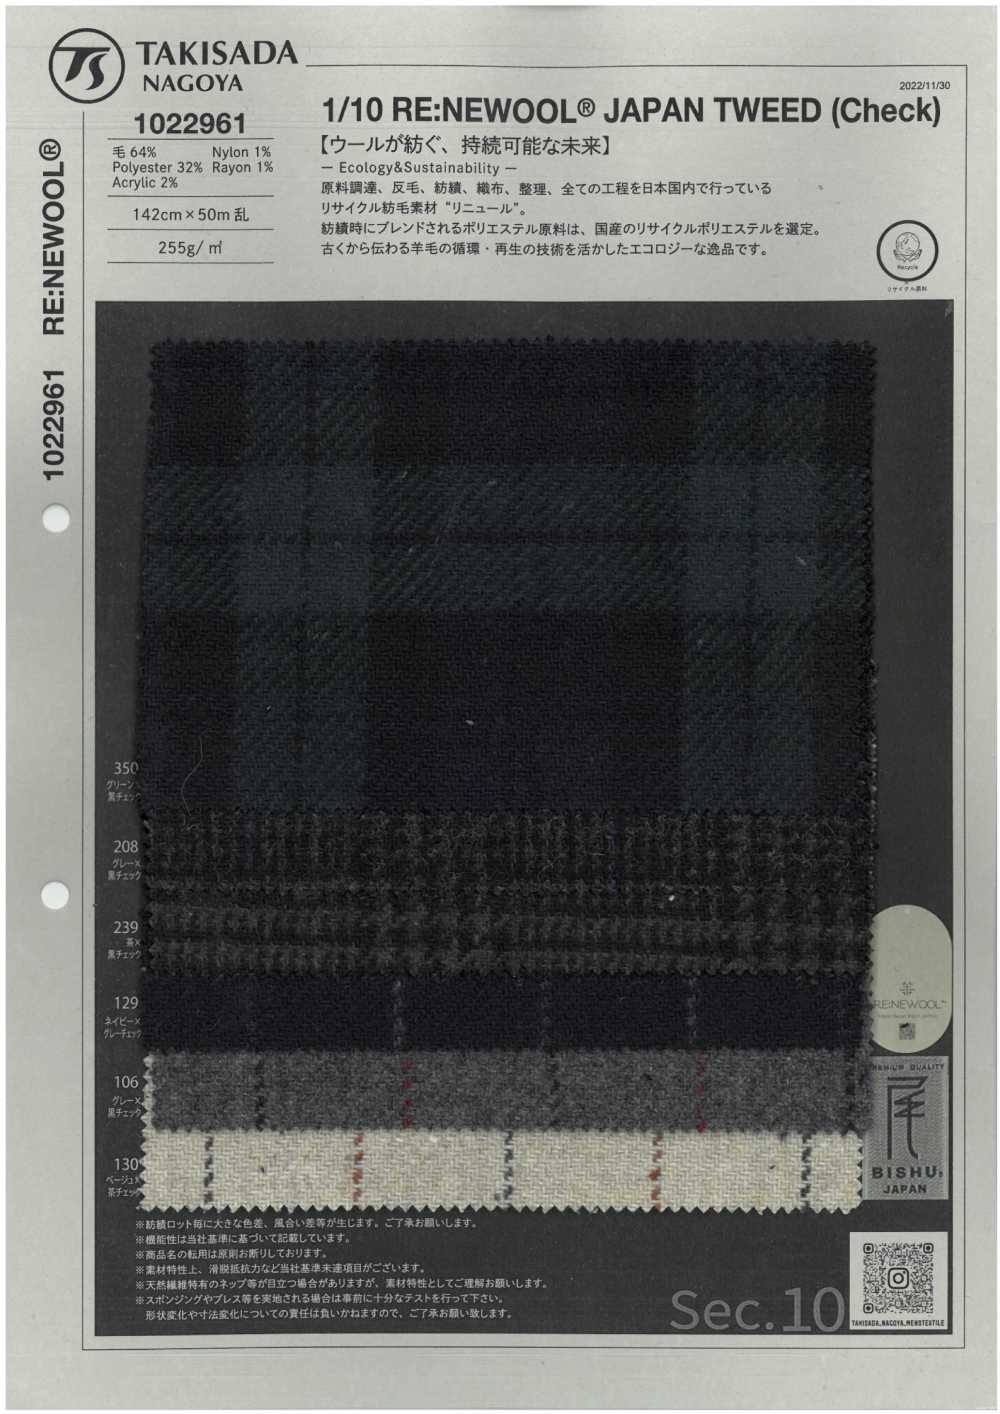 1022961 1/10 RE:NEWOOL®︎ JAPAN TWEED (Check)[Textile / Fabric] Takisada Nagoya